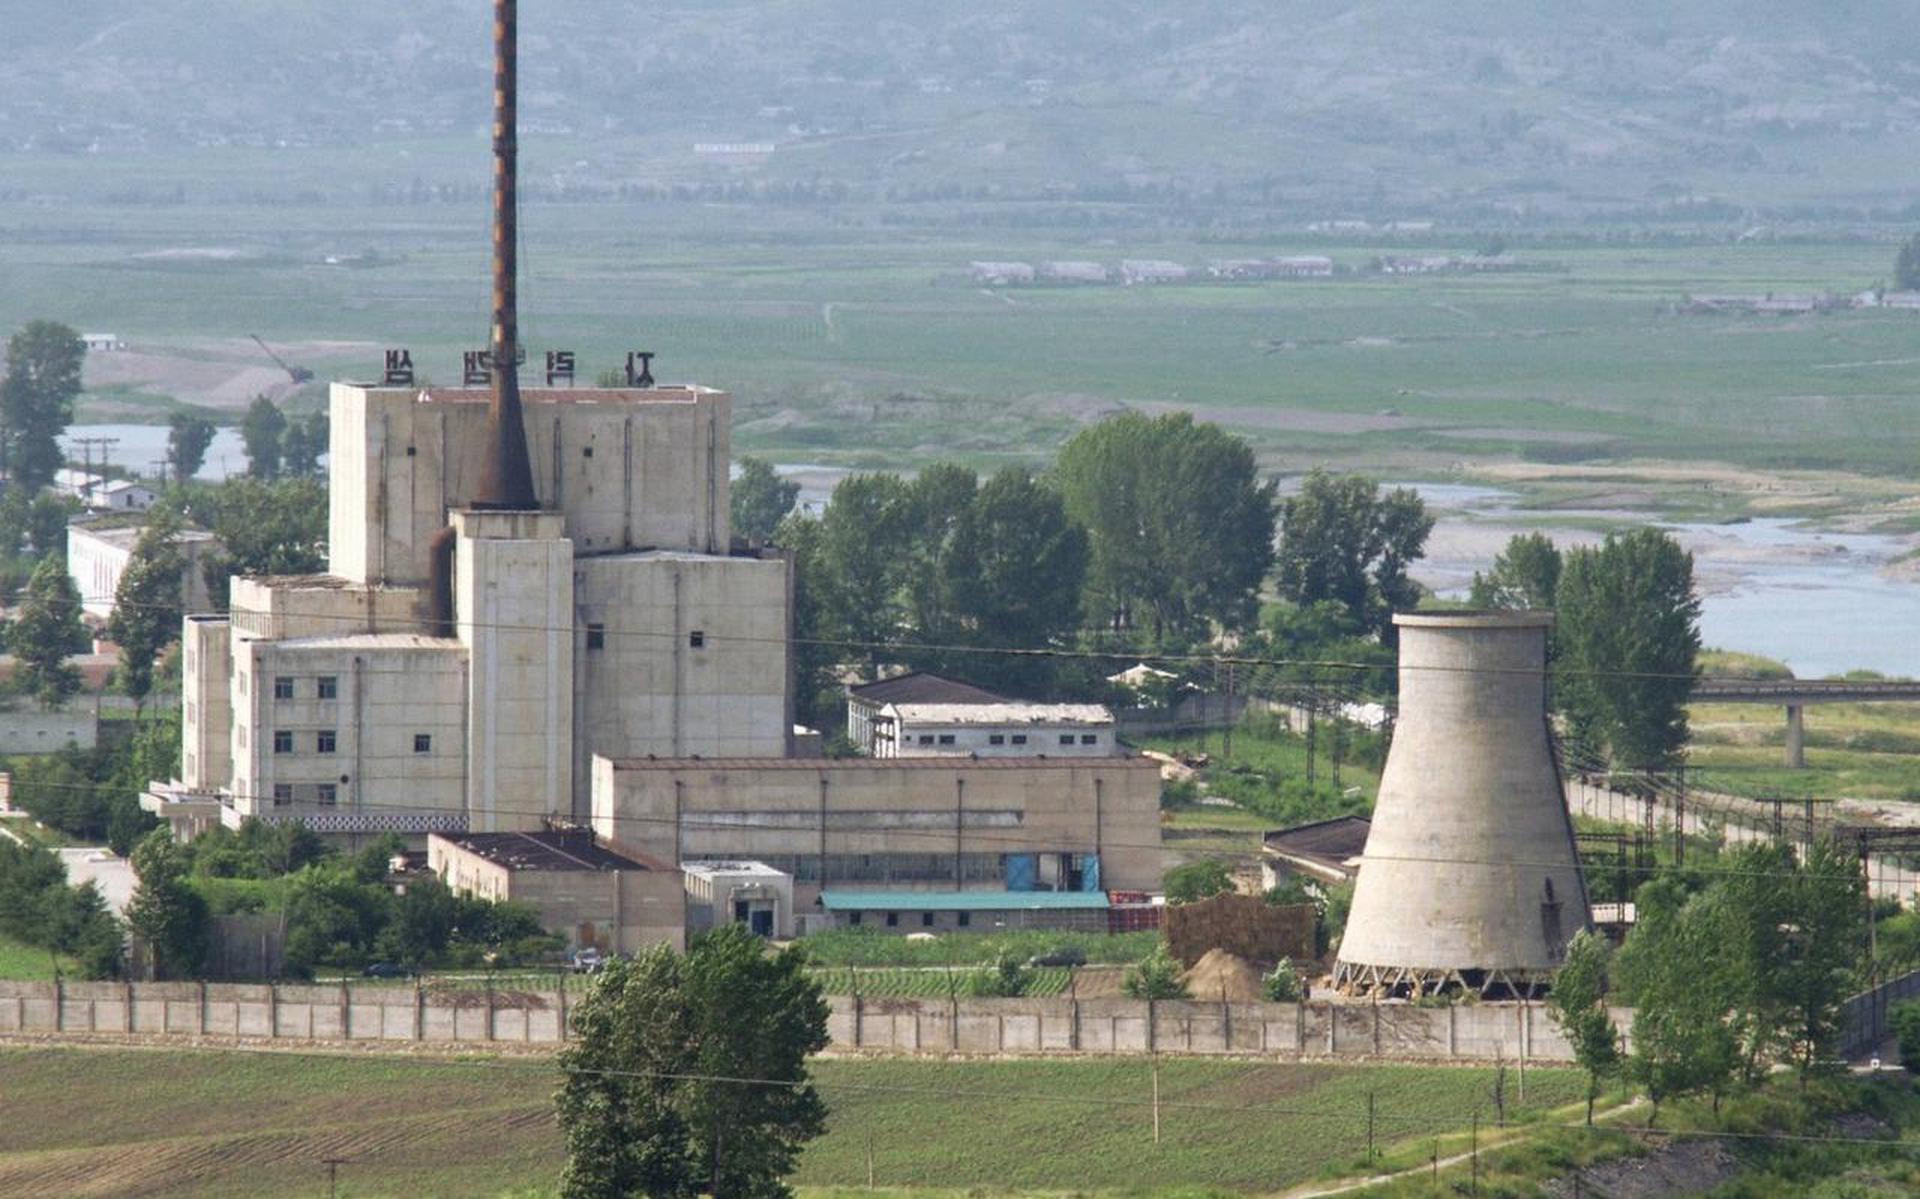 De nucleaire fabriek in Yongbyon inn Noord-Korea op archiefbeeld.
